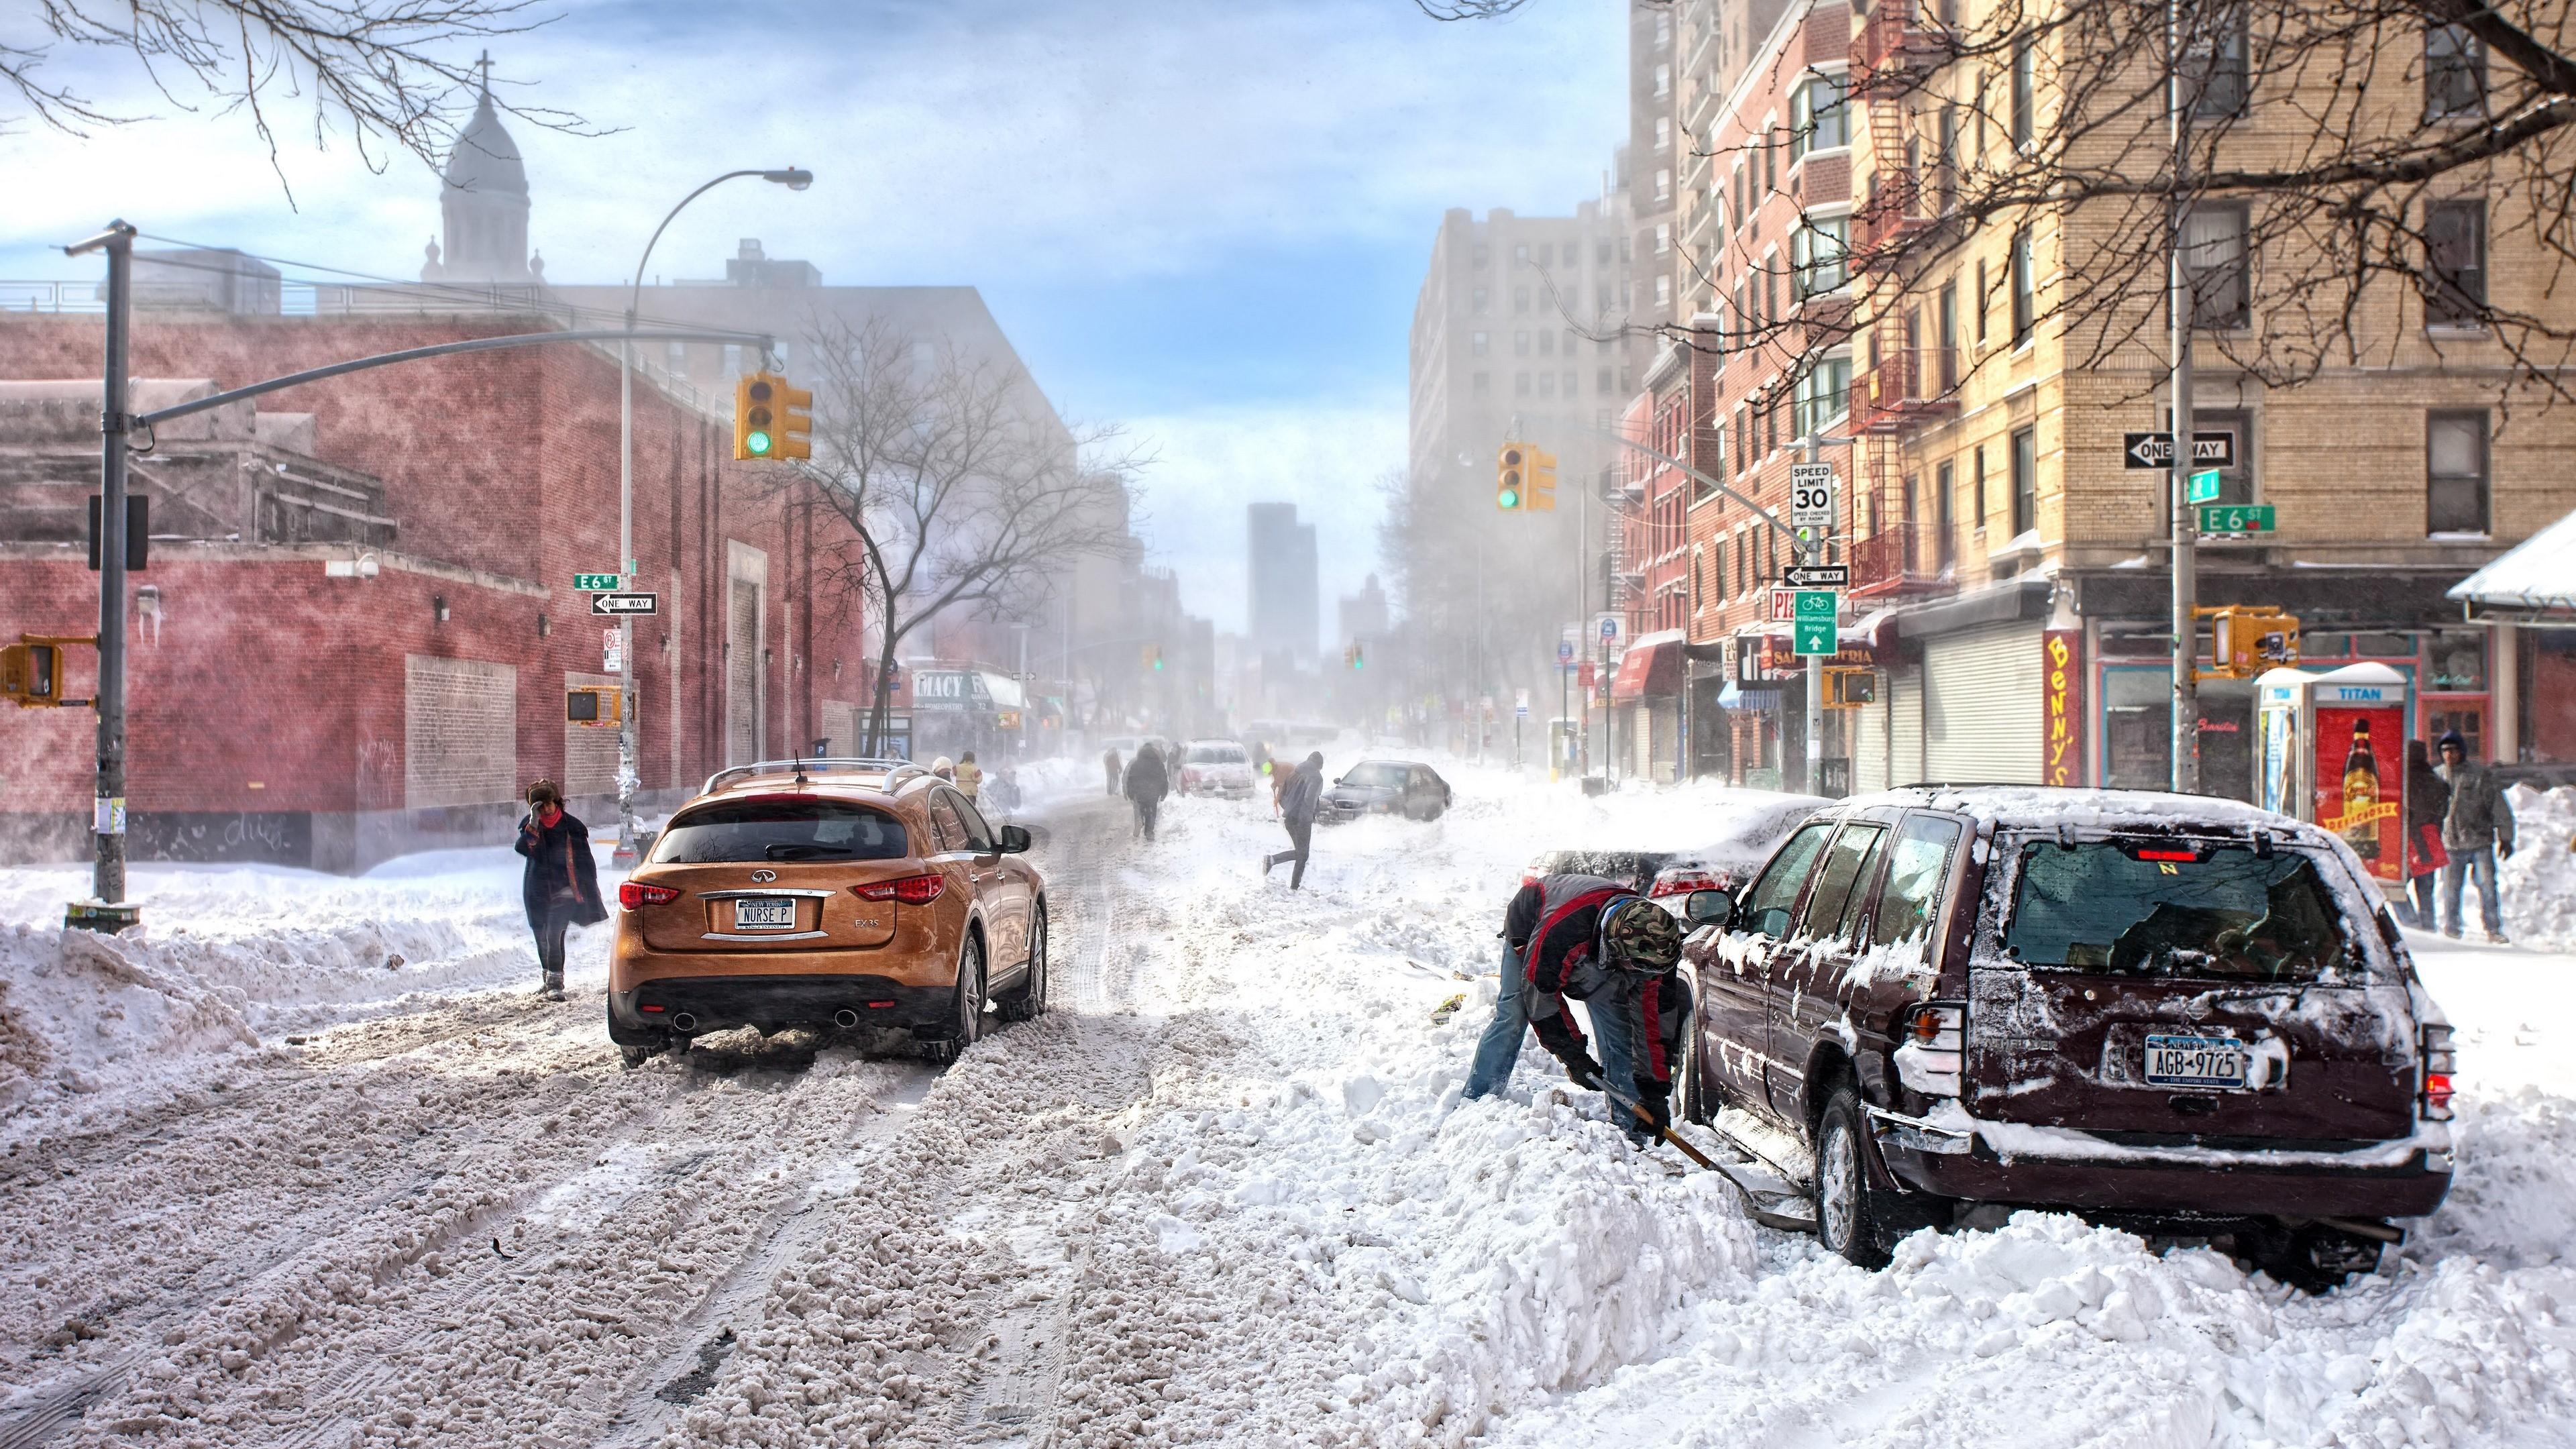 HD wallpaper, Winter 4K, People, Snow, Car, City, Snowfall, Building